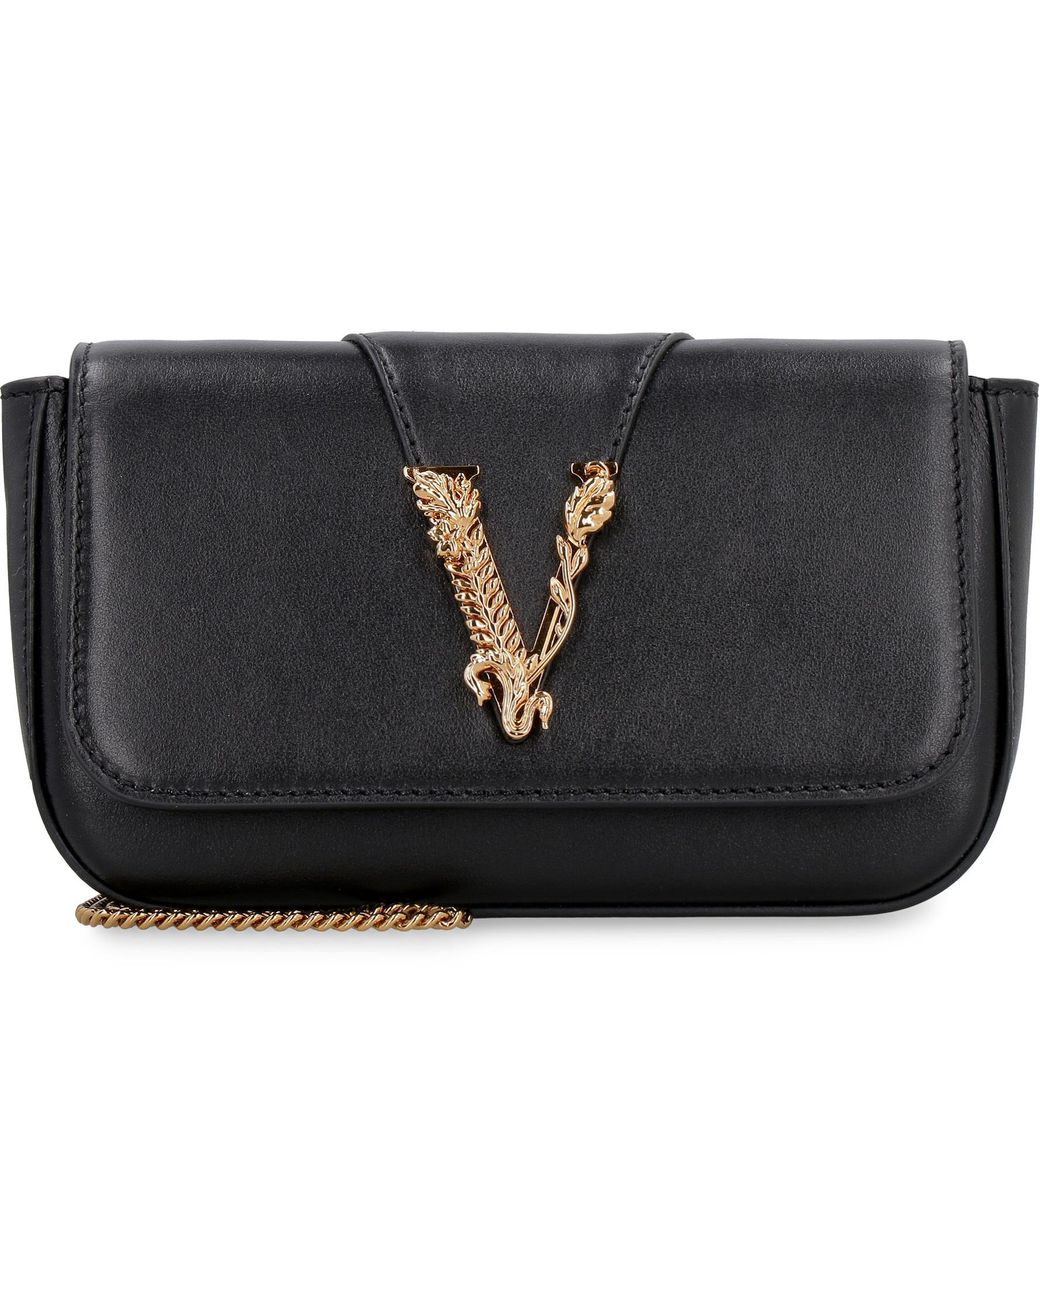 Versace Virtus Leather Mini-bag in Black - Lyst